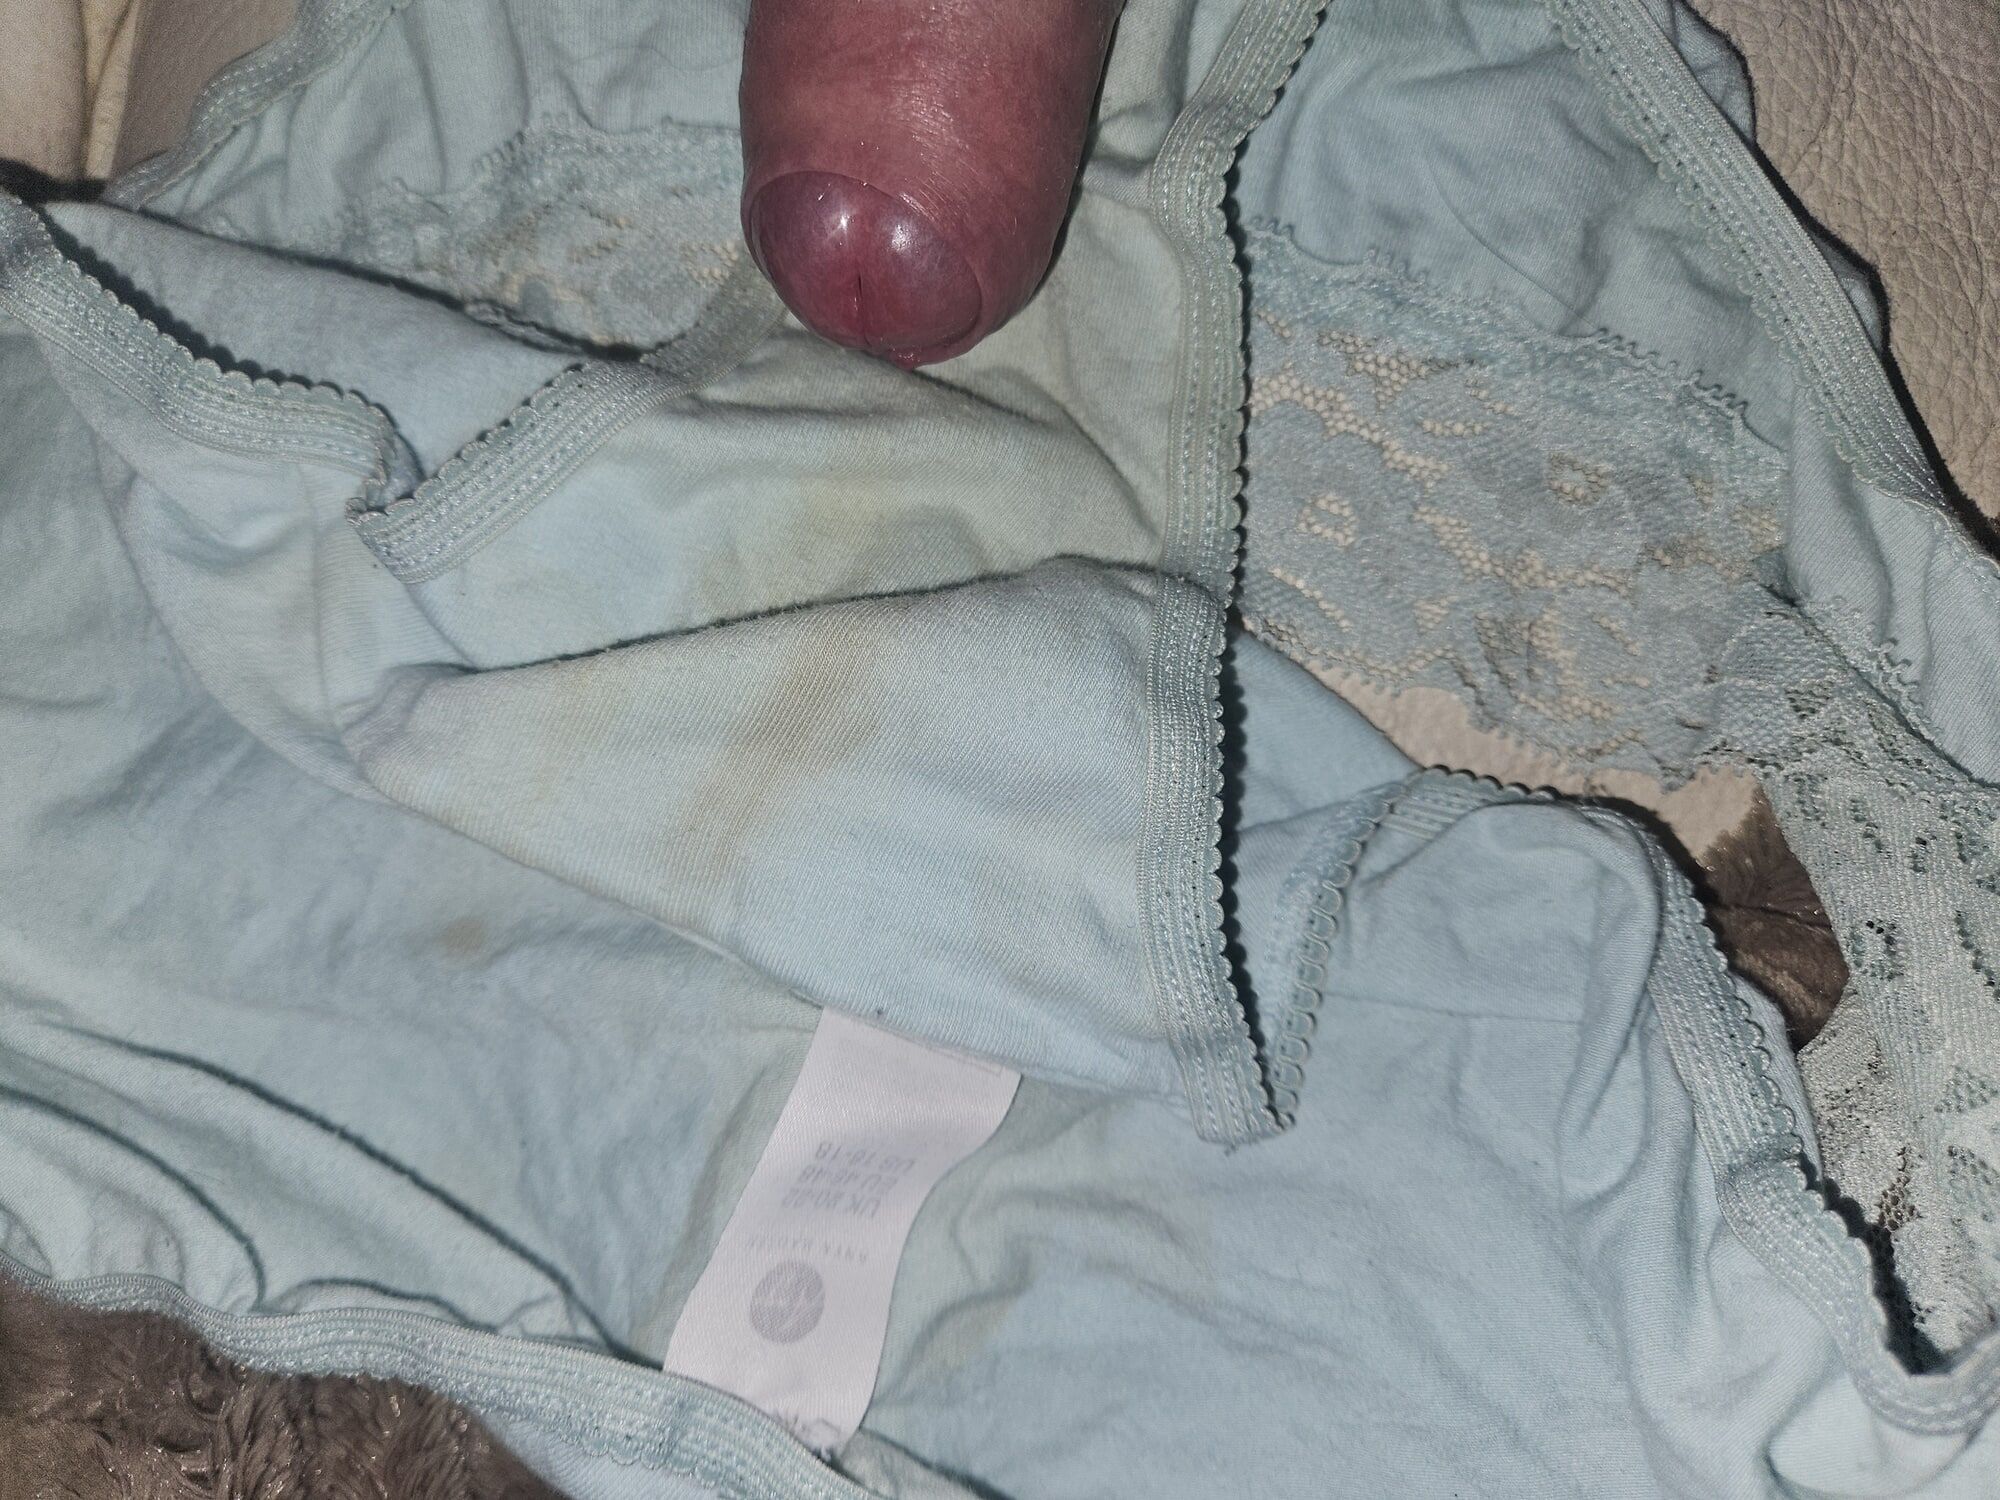 More dirty pants  #4